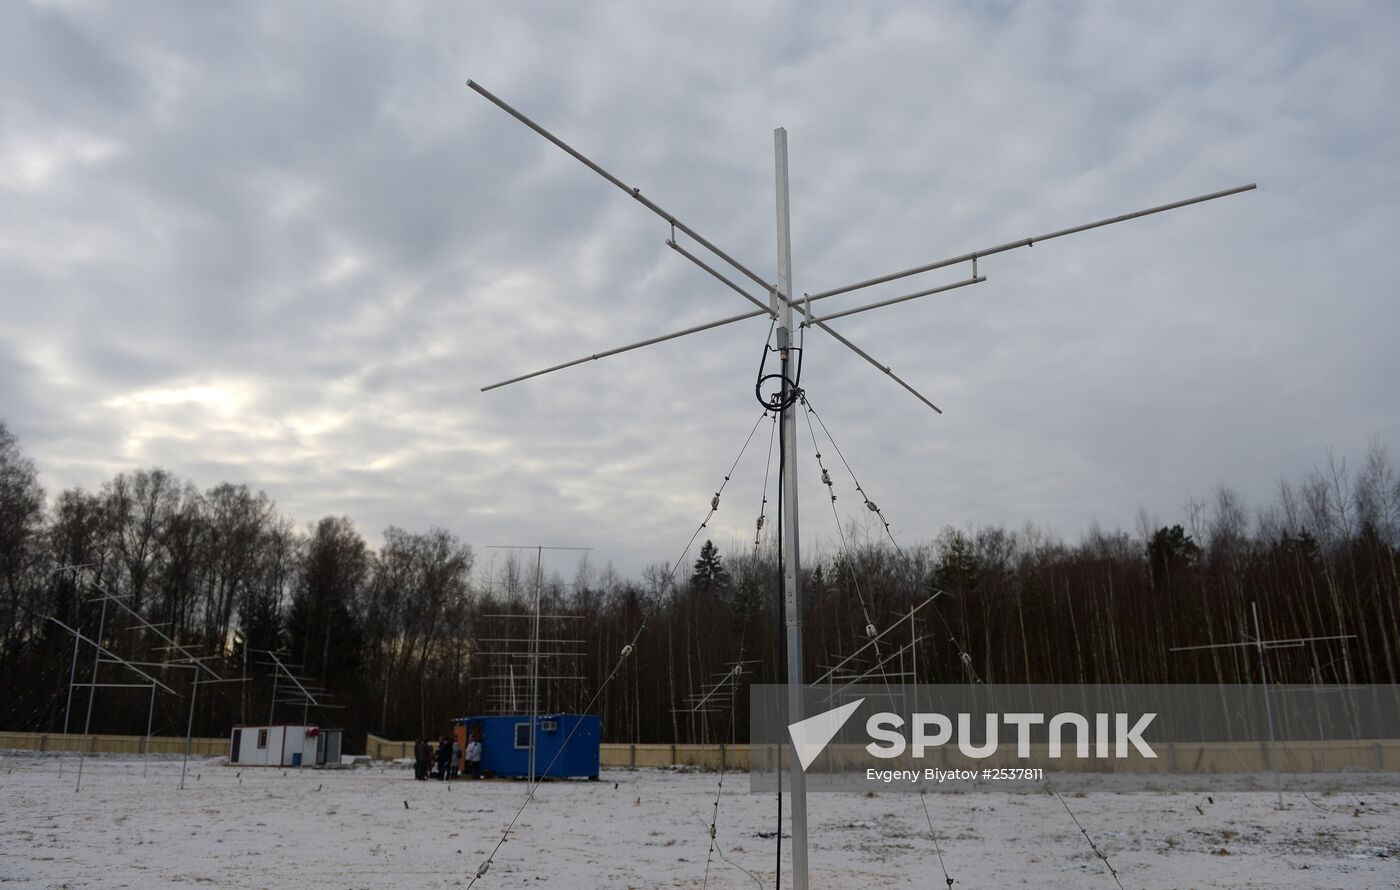 Demonstration of radar work at proving ground in Obninsk